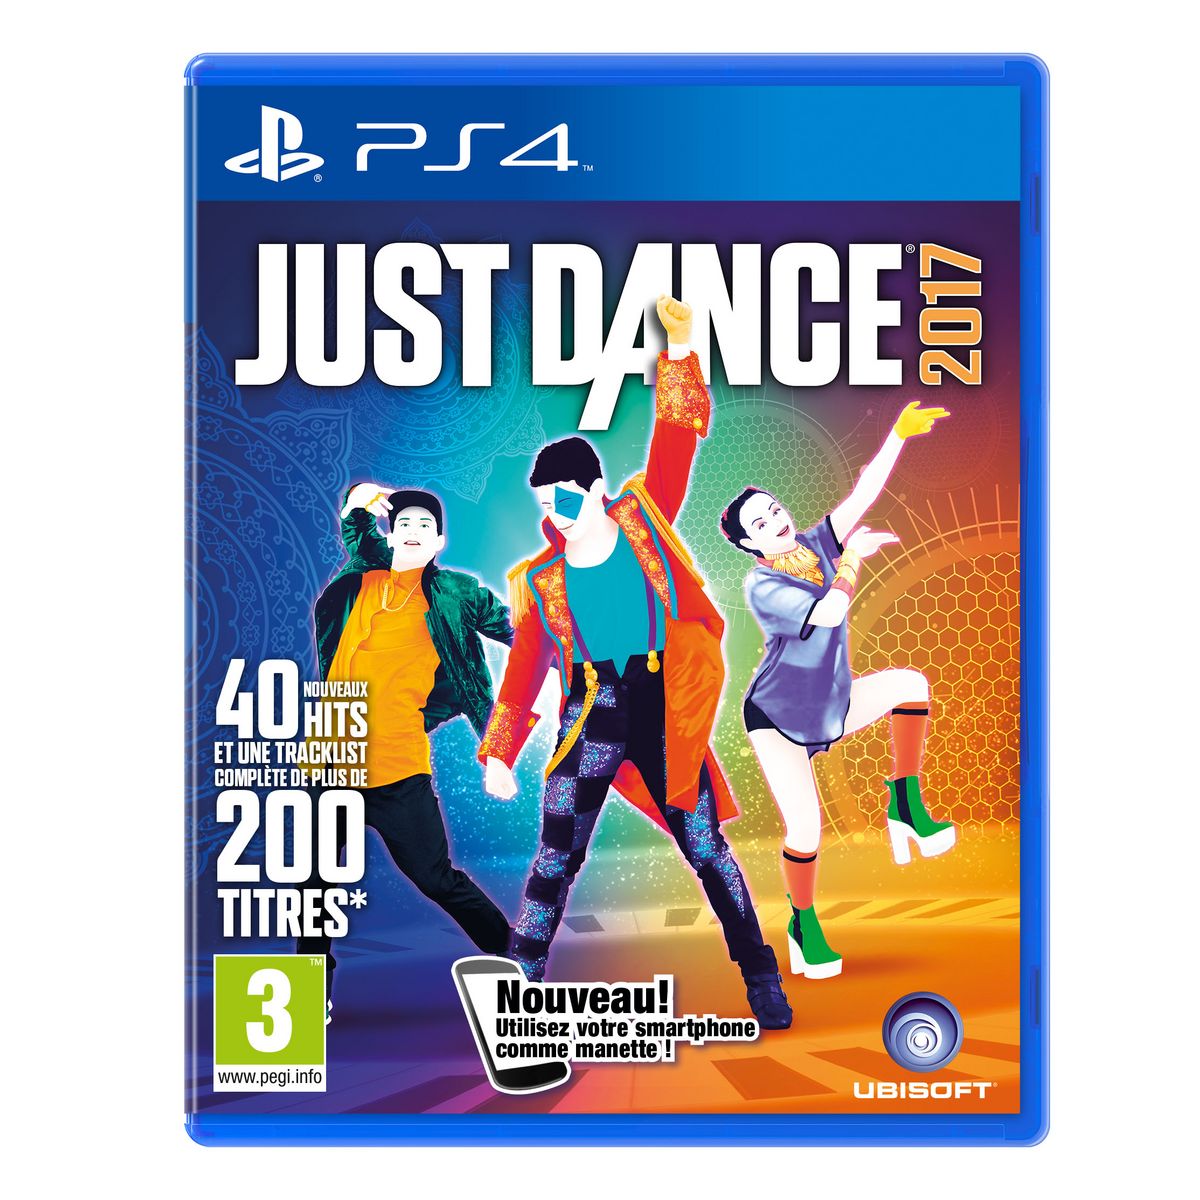 Игра just one. Just Dance игра на ps4 приставка. Just Dance 2017 Wii коробка. Just Dance 2017 Xbox one обложка. Джаст дэнс 2017.